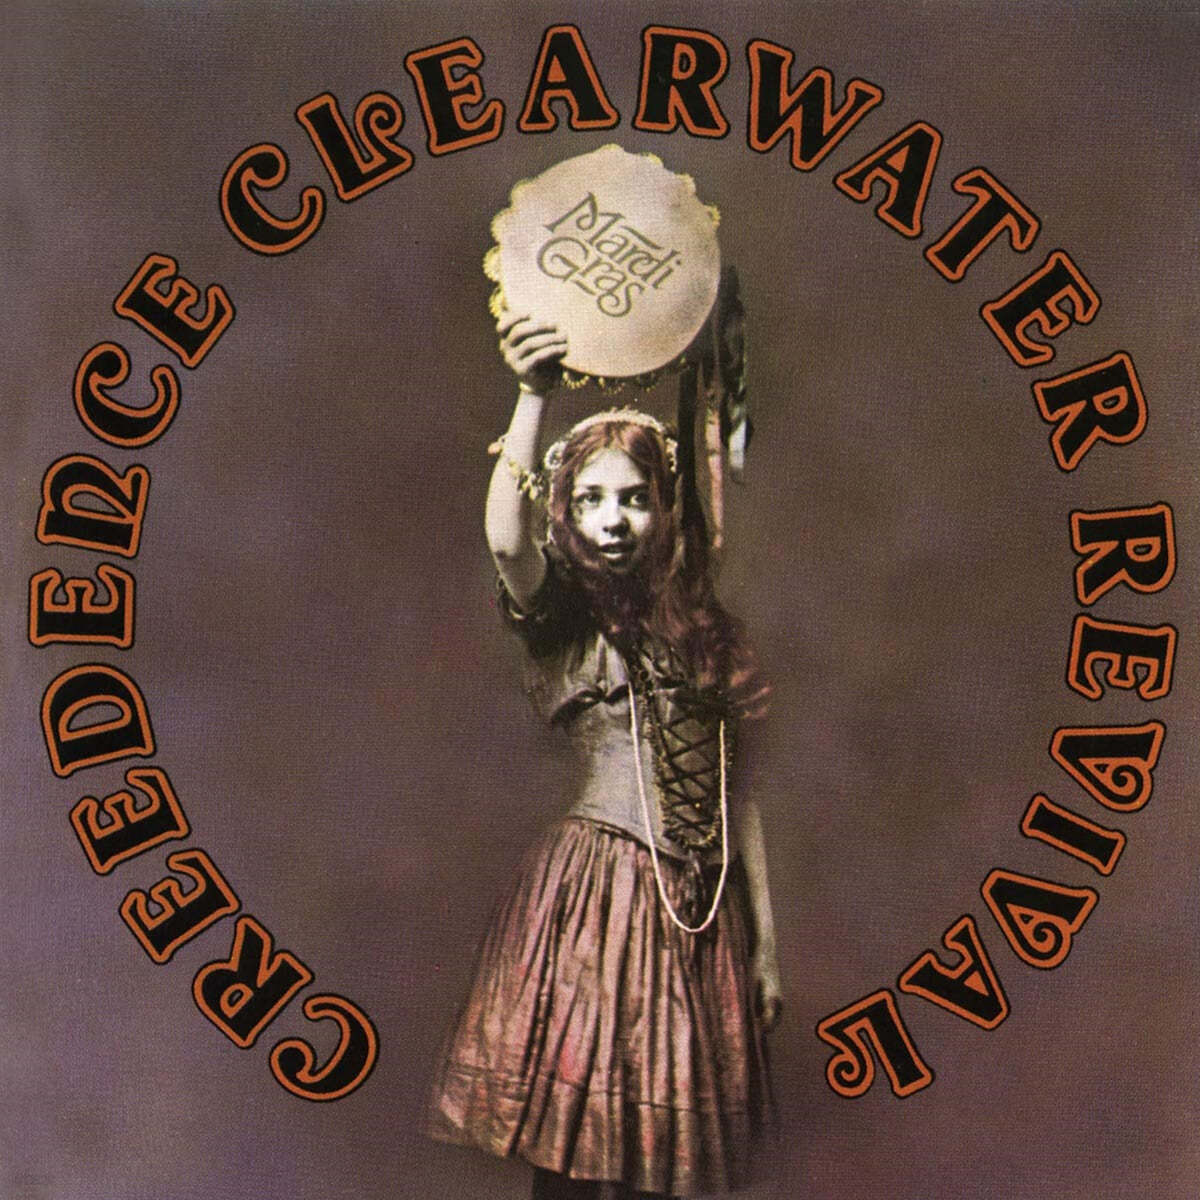 Creedence Clearwater Revival (C.C.R.) - 7집 Mardi Gras [LP] 